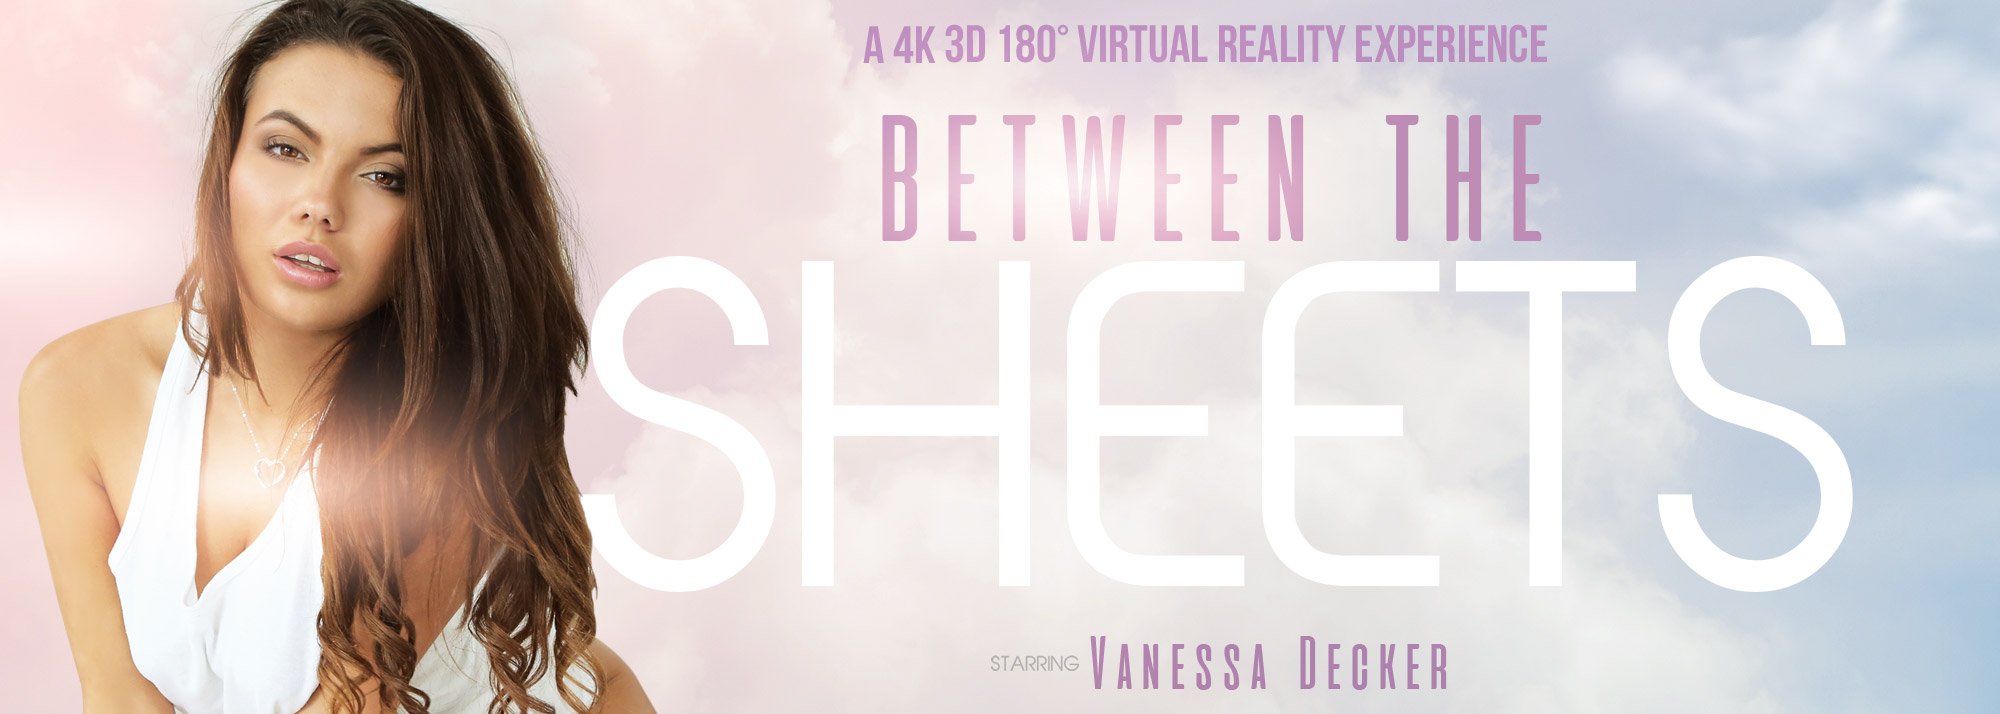 Between The Sheets with Vanessa Decker  Slideshow